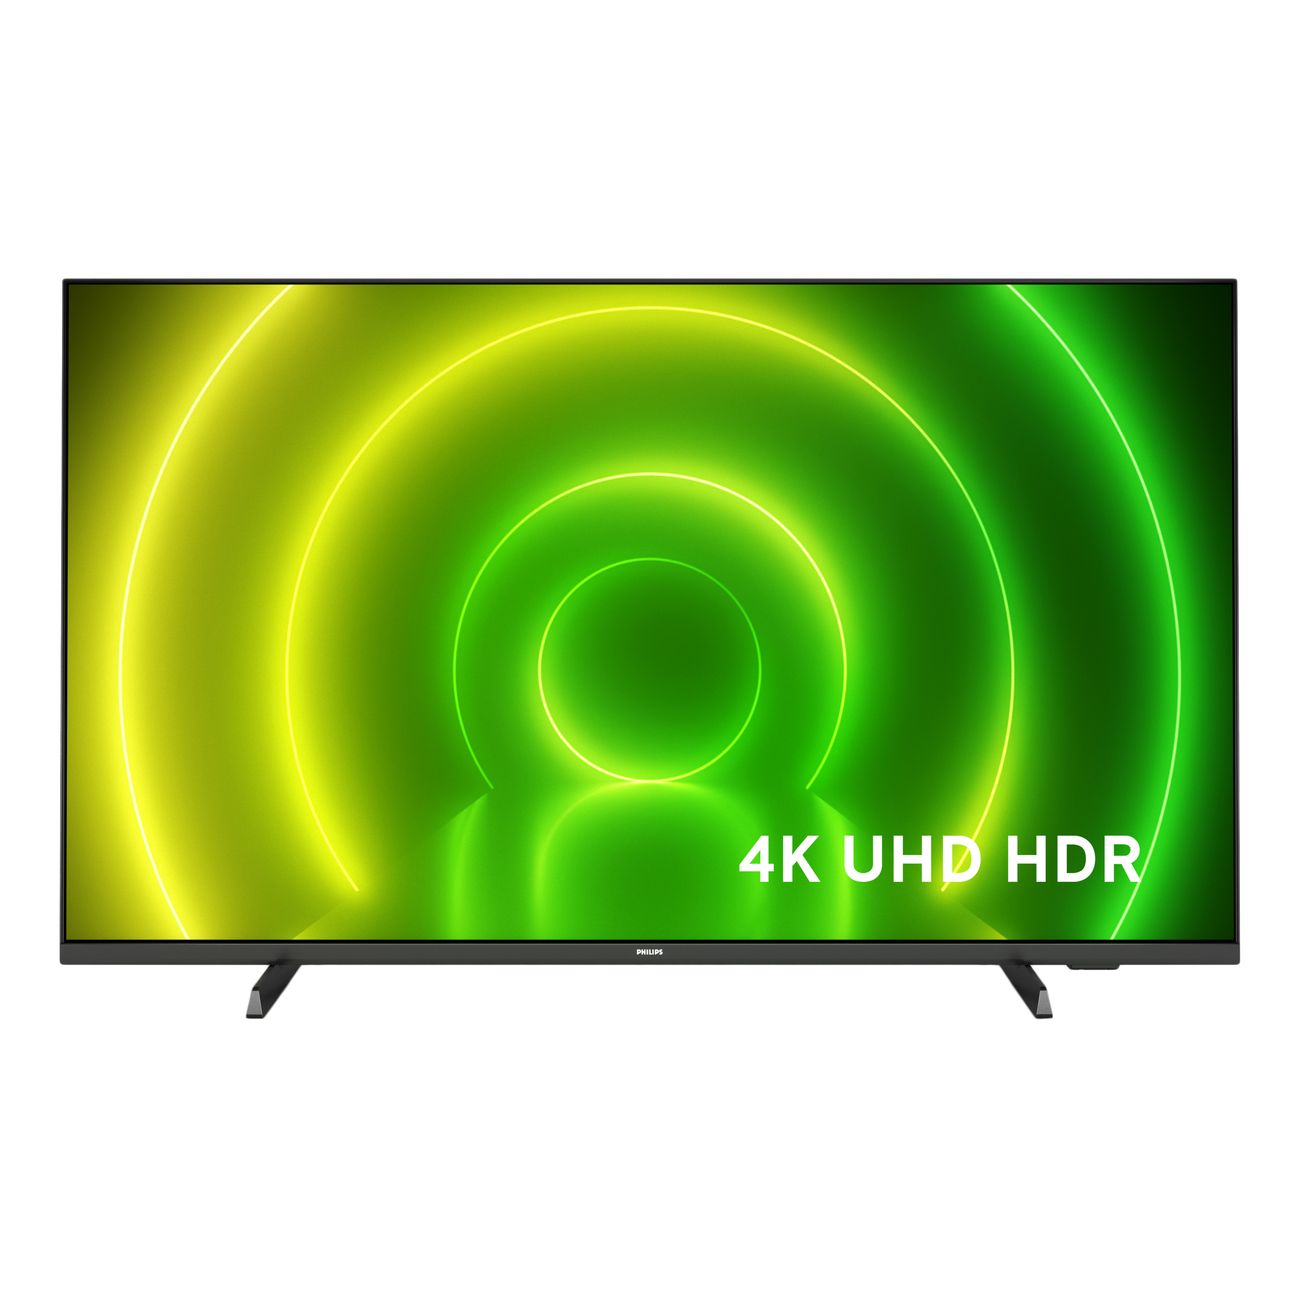 4K (Ultra HD) Smart телевизор Philips 43pus7406/60, цвет черный 503717 43pus7406/60 - фото 1